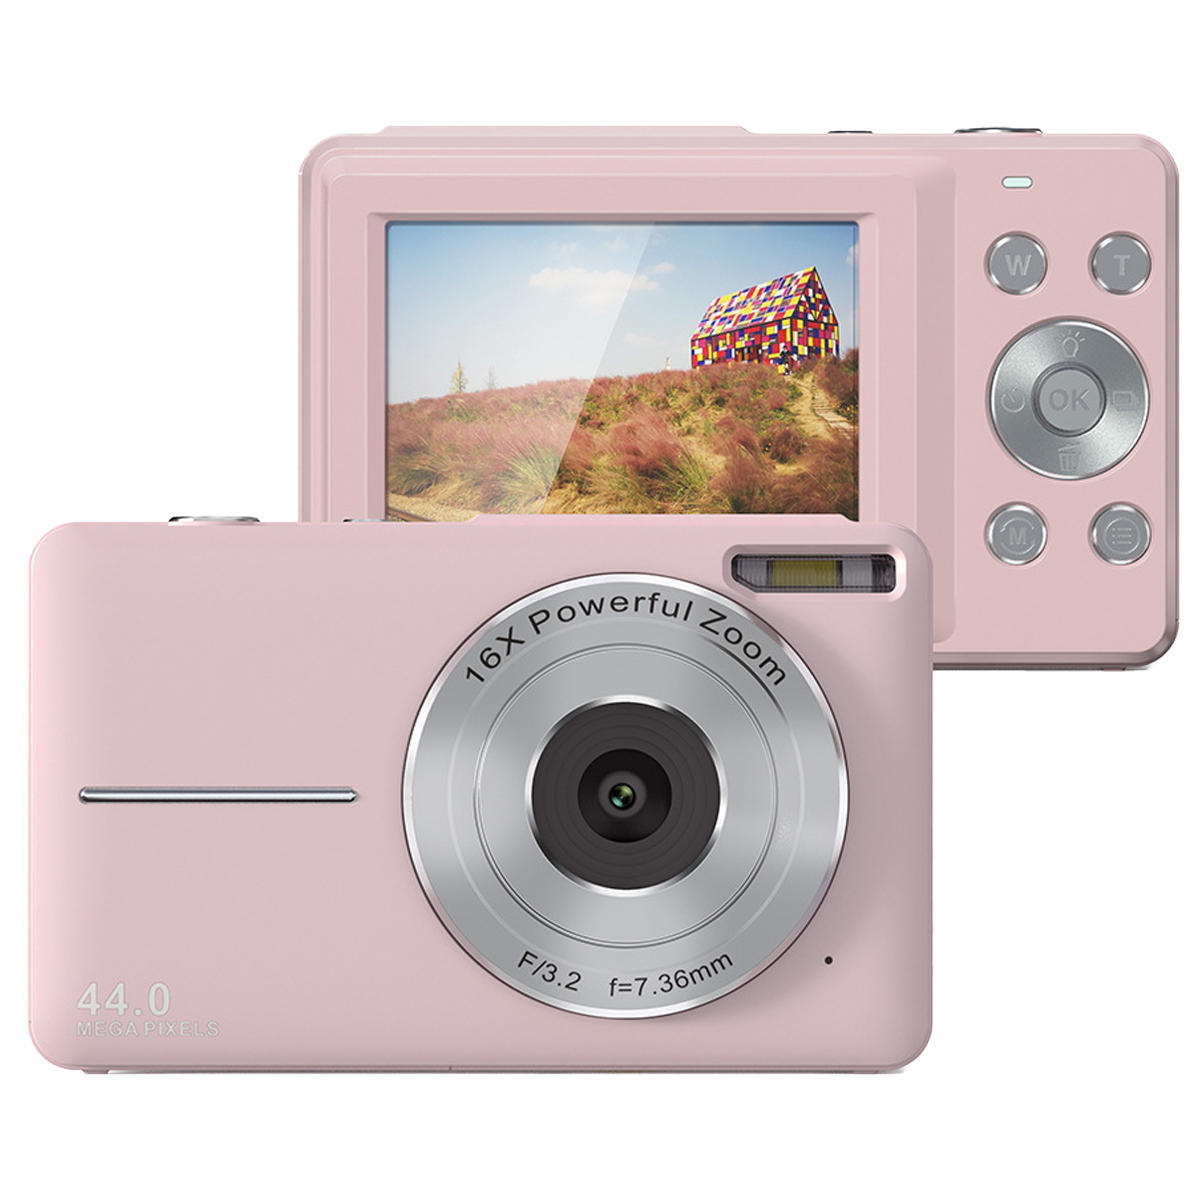 Digitalkamera rosa tragbare,Zuhause,Student,Hochauflösung KINSI